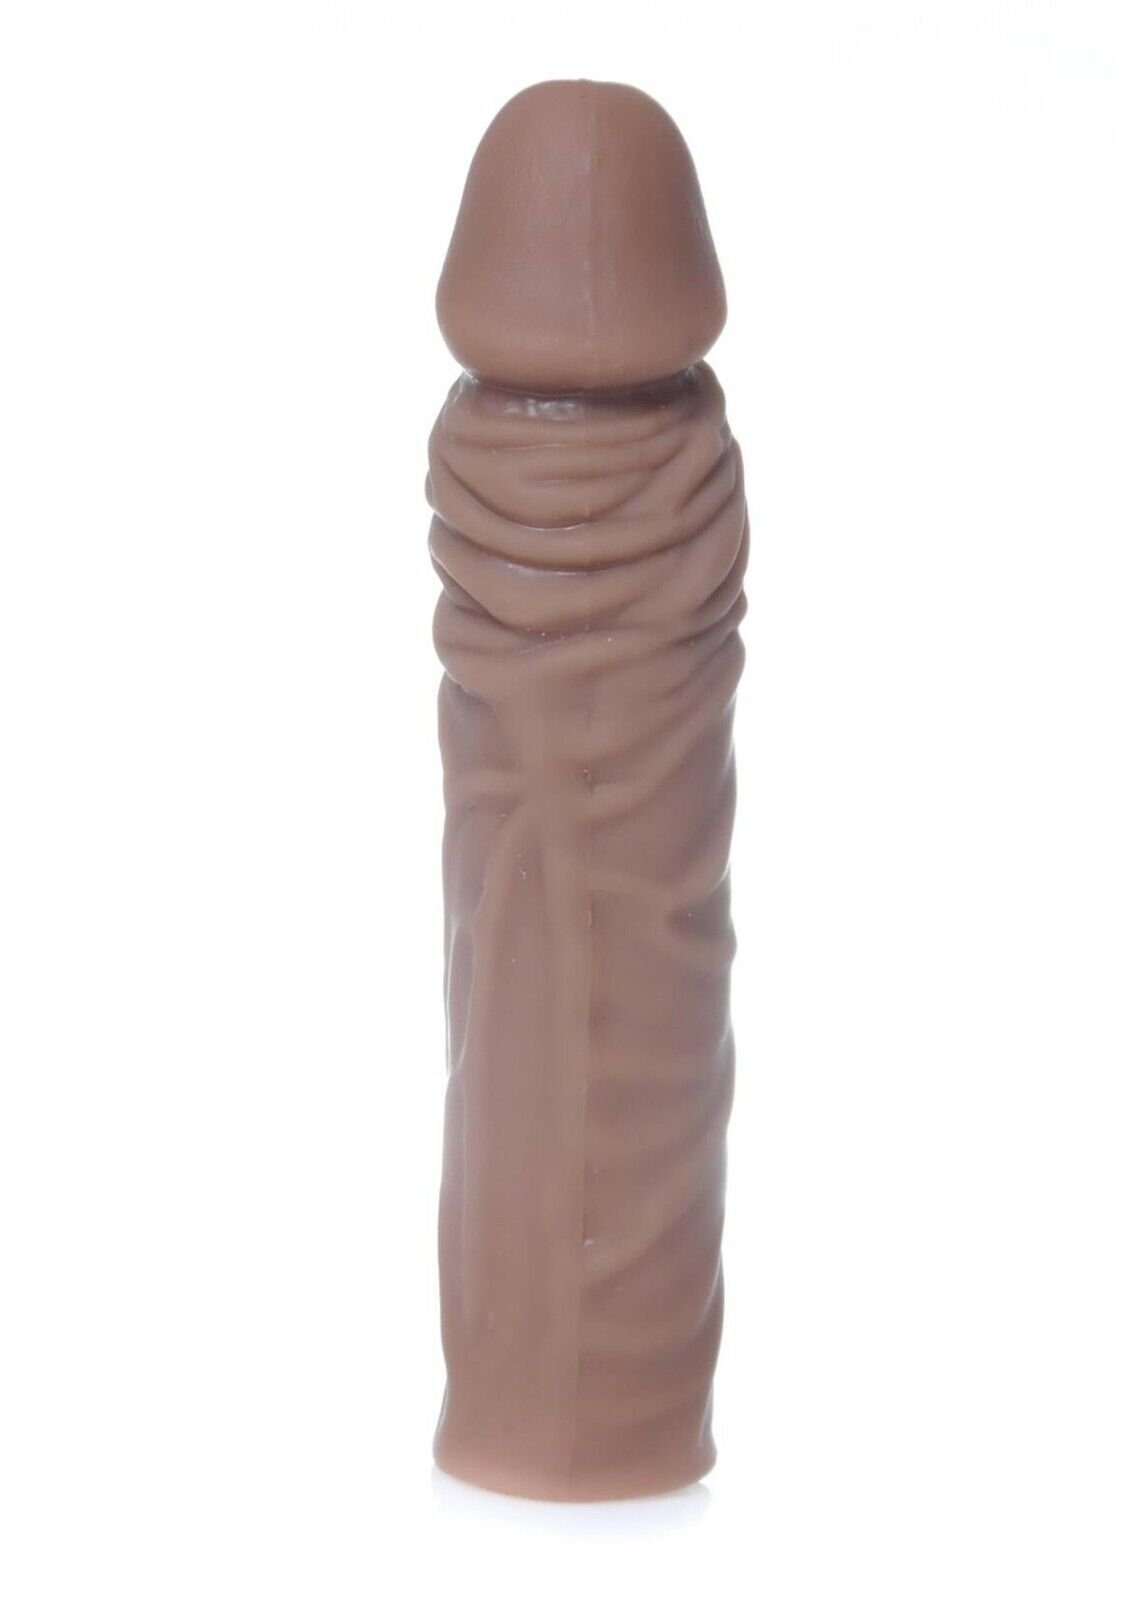 denu-shop Penishülle TPE Cock Sexspielzeug Penishülle Sleeve Extender Vergrößerung Kondom